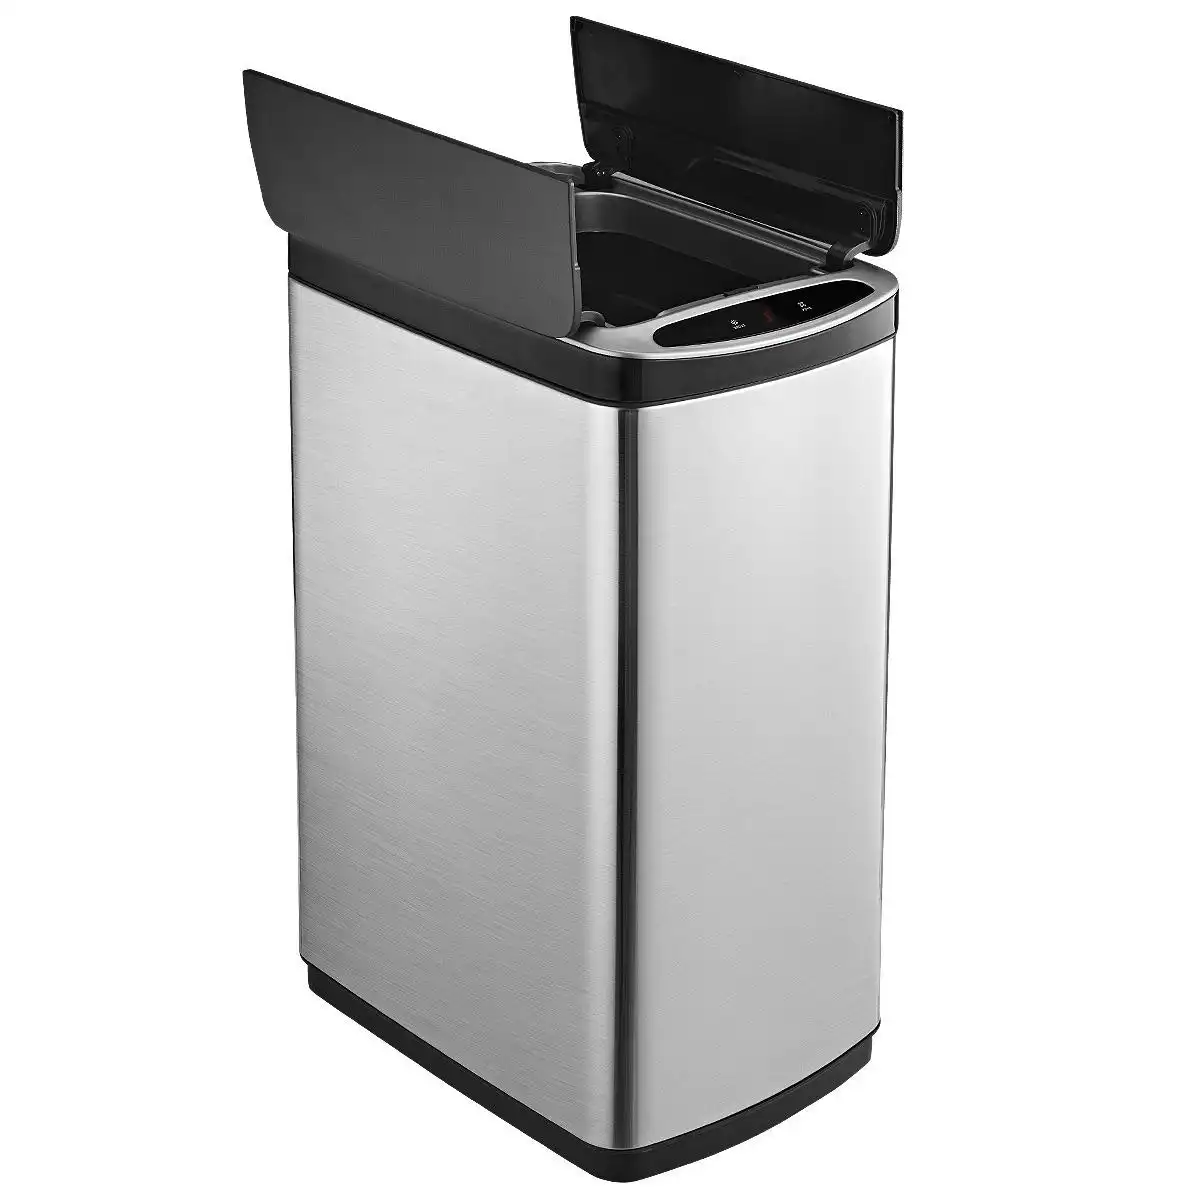 Maxkon 50L Smart Bin Kitchen Rubbish Bin Trash Waste Recycling Bin with Infrared Motion Sensor